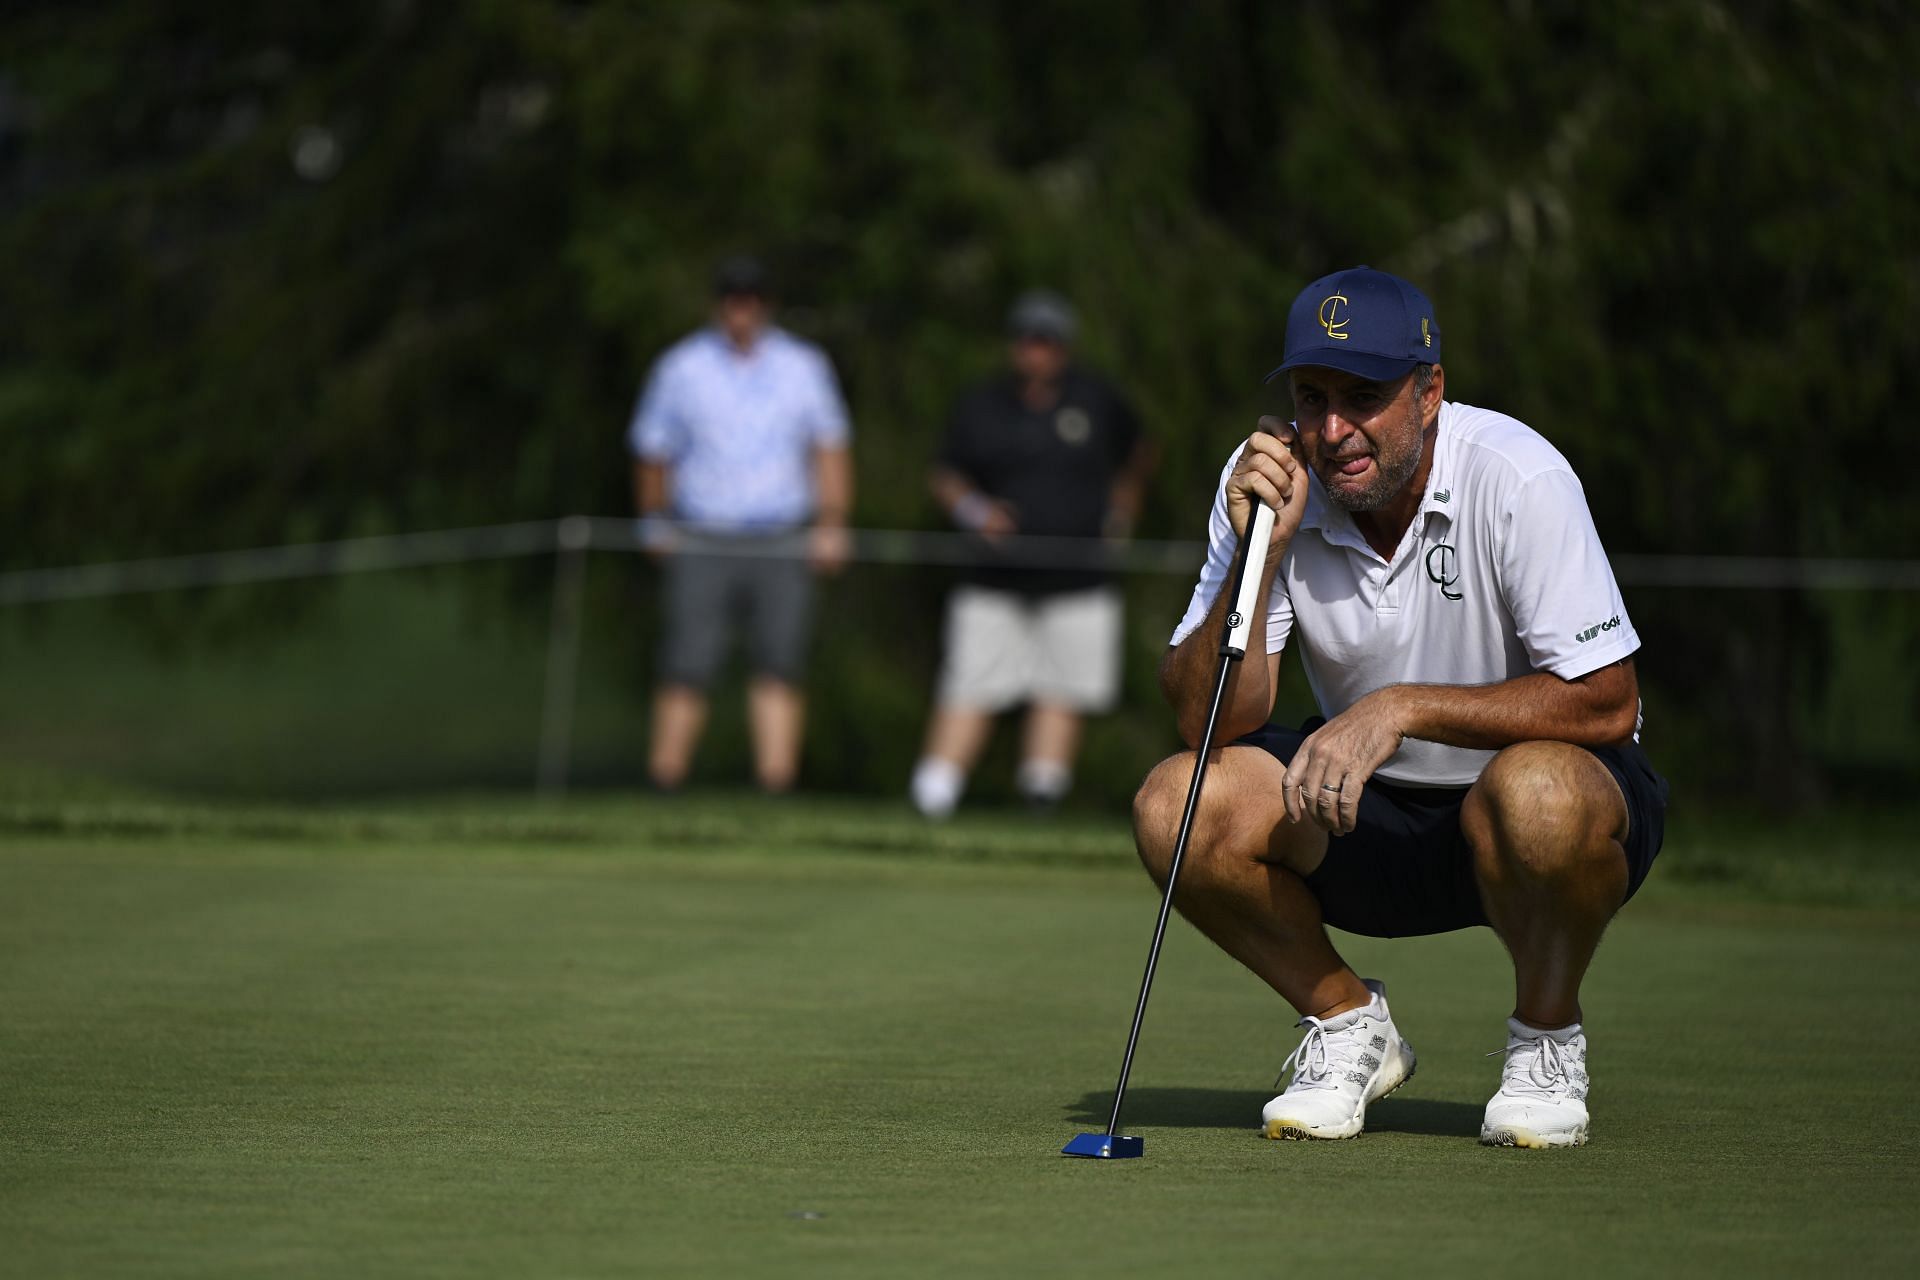 Richard Bland was unhappy with the PGA Tour